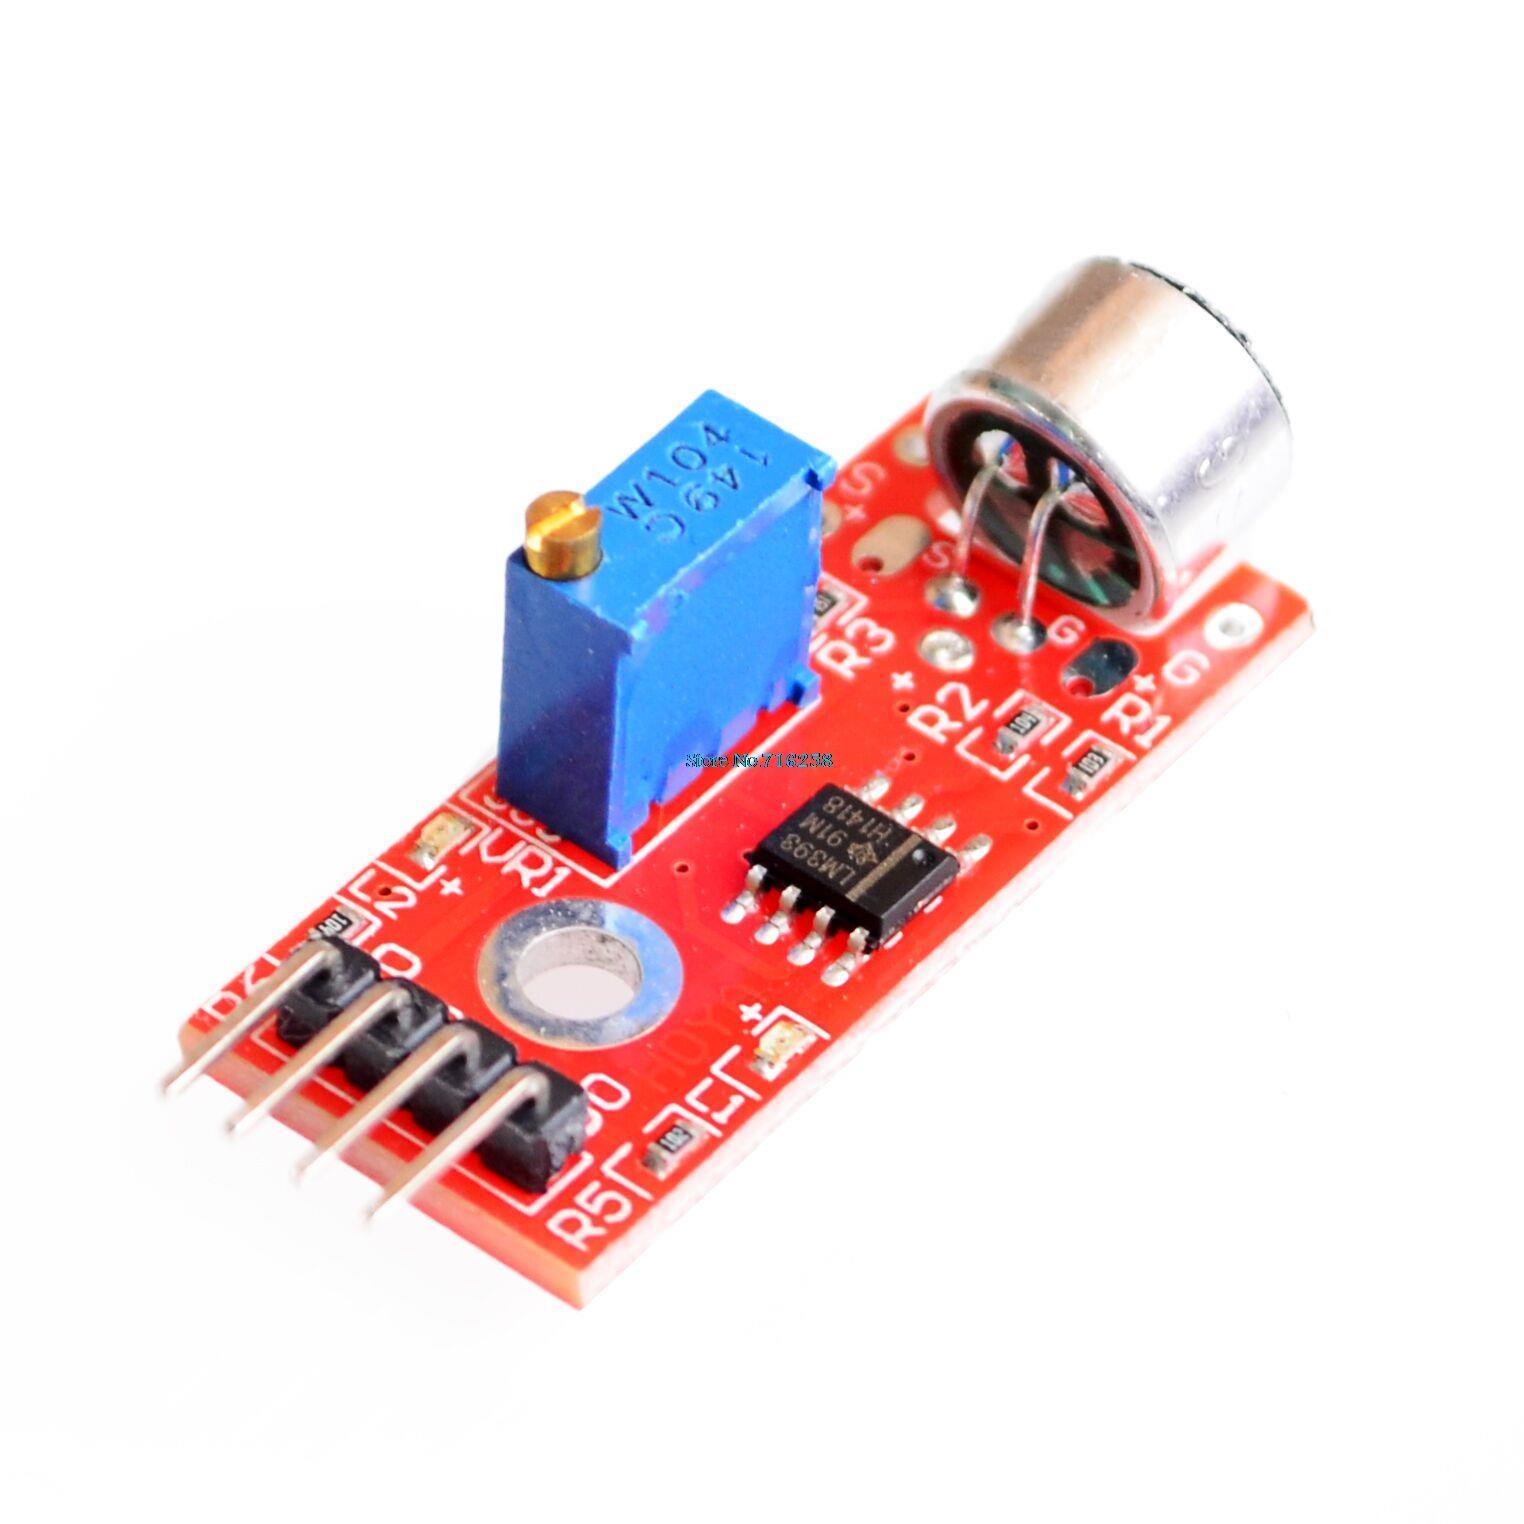 10pcs-lot-KY-037-New-4pin-Voice-Sound-Detection-Sensor-Module-Microphone-Transmitter-Smart-Robot-Car-for-arduino-DIY-Kit